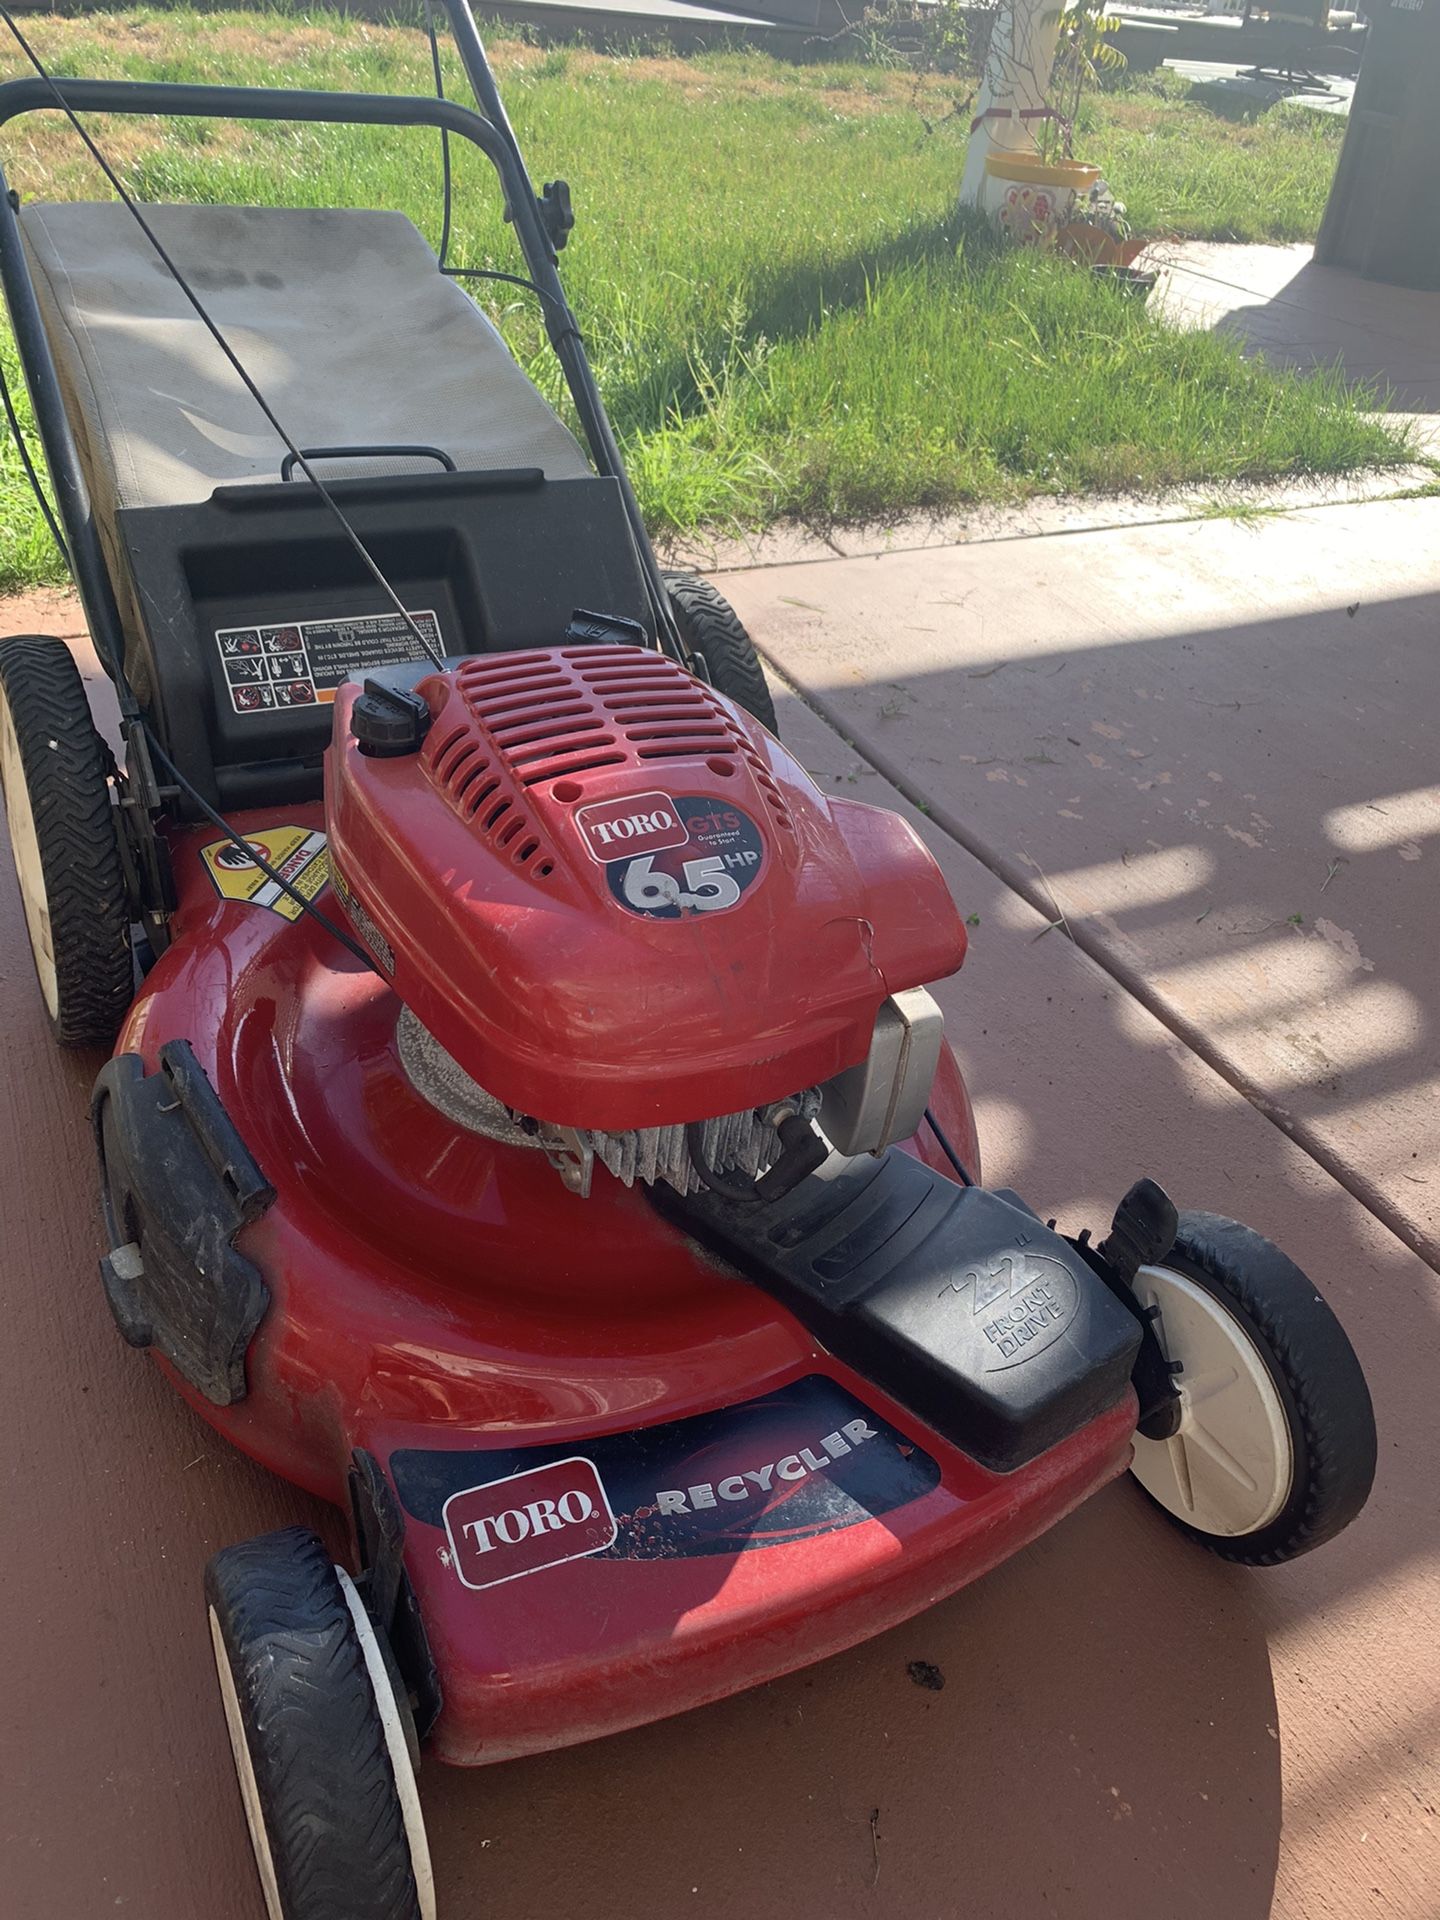 Toro lawn mower